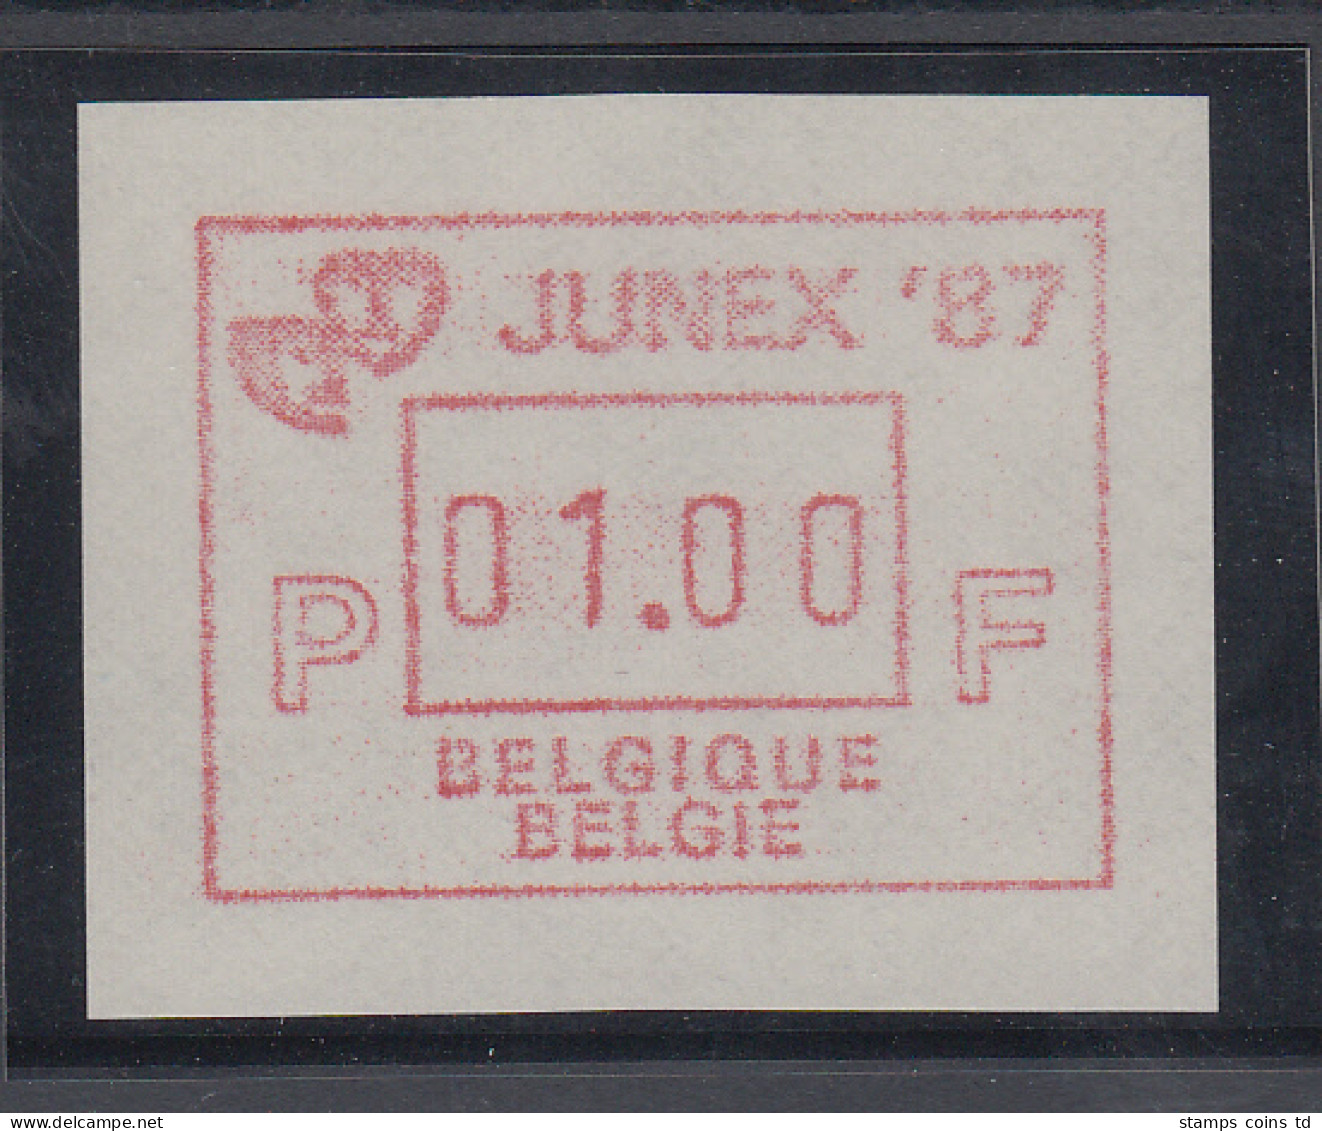 Belgien FRAMA-ATM Sonderausgabe JUNEX '87 Von VS **  - Andere & Zonder Classificatie